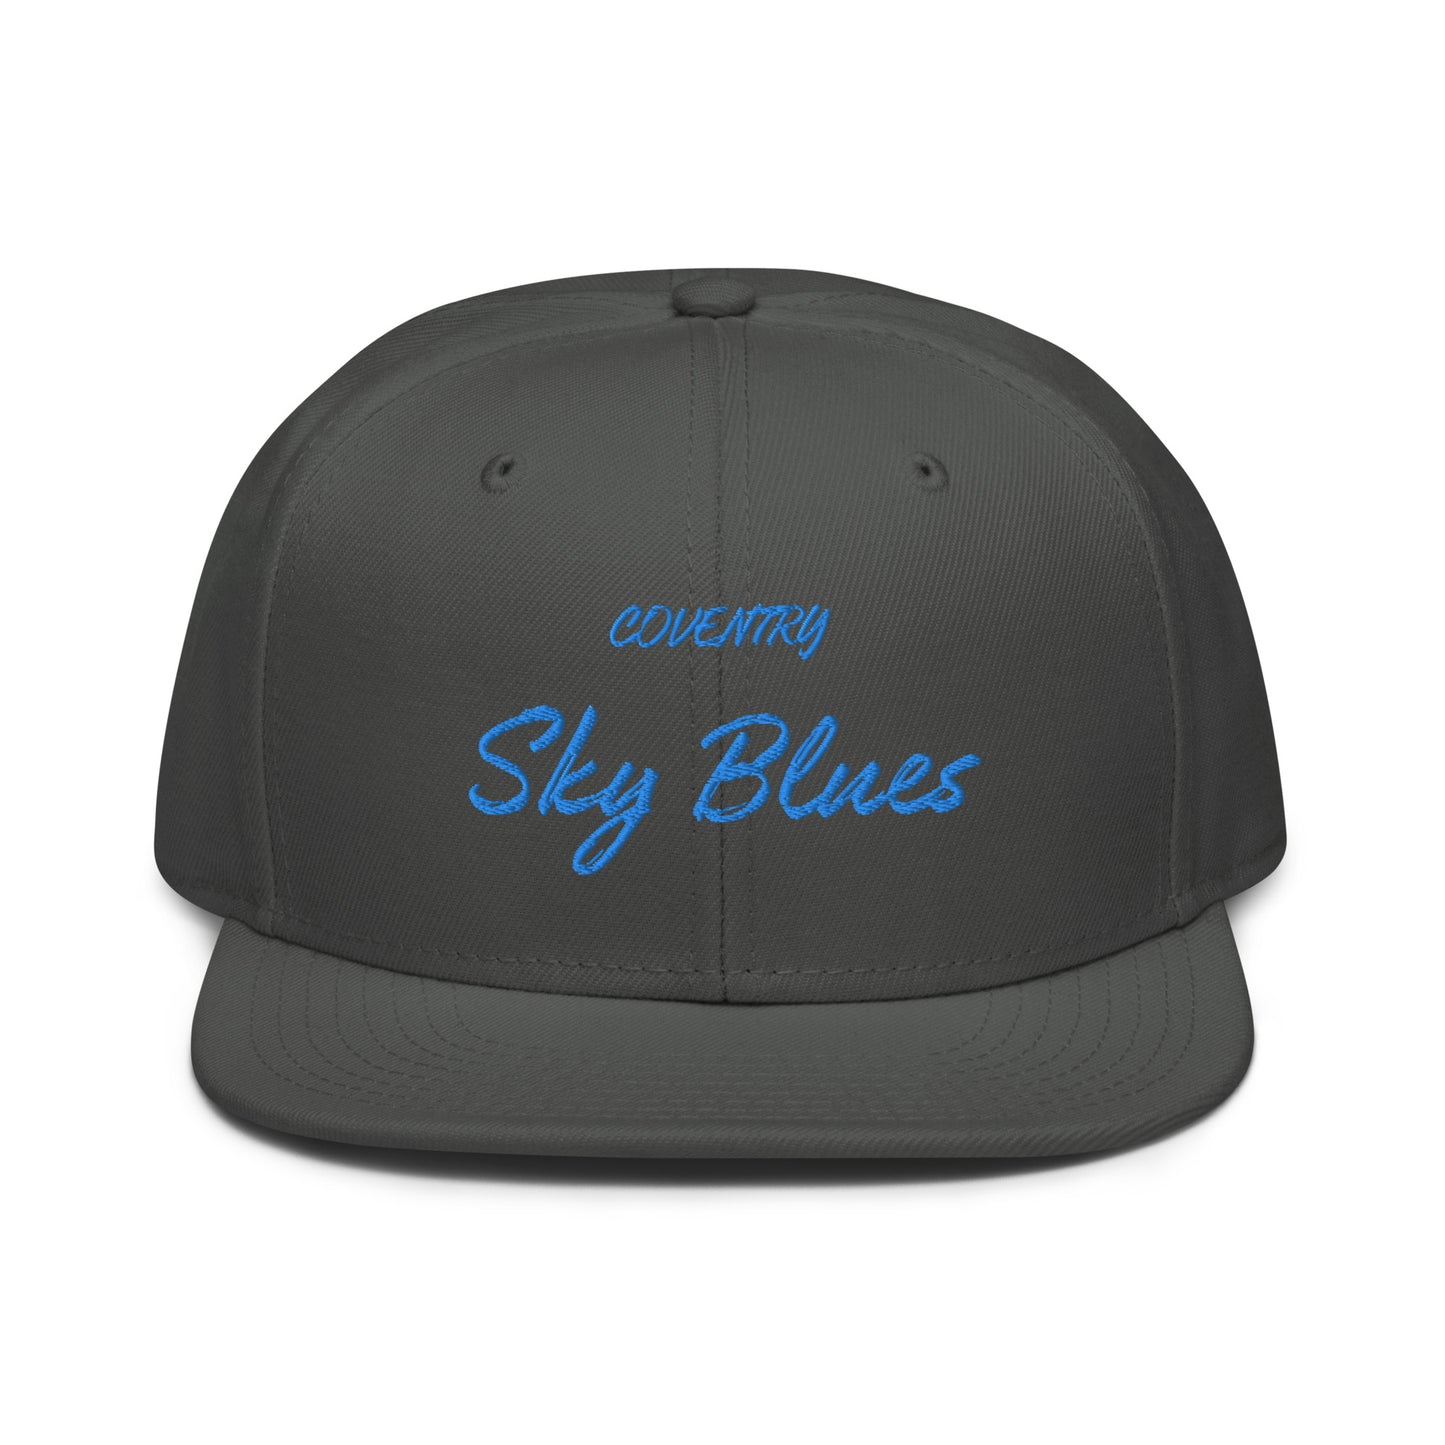 Coventry Sky Blues Snapback Hat